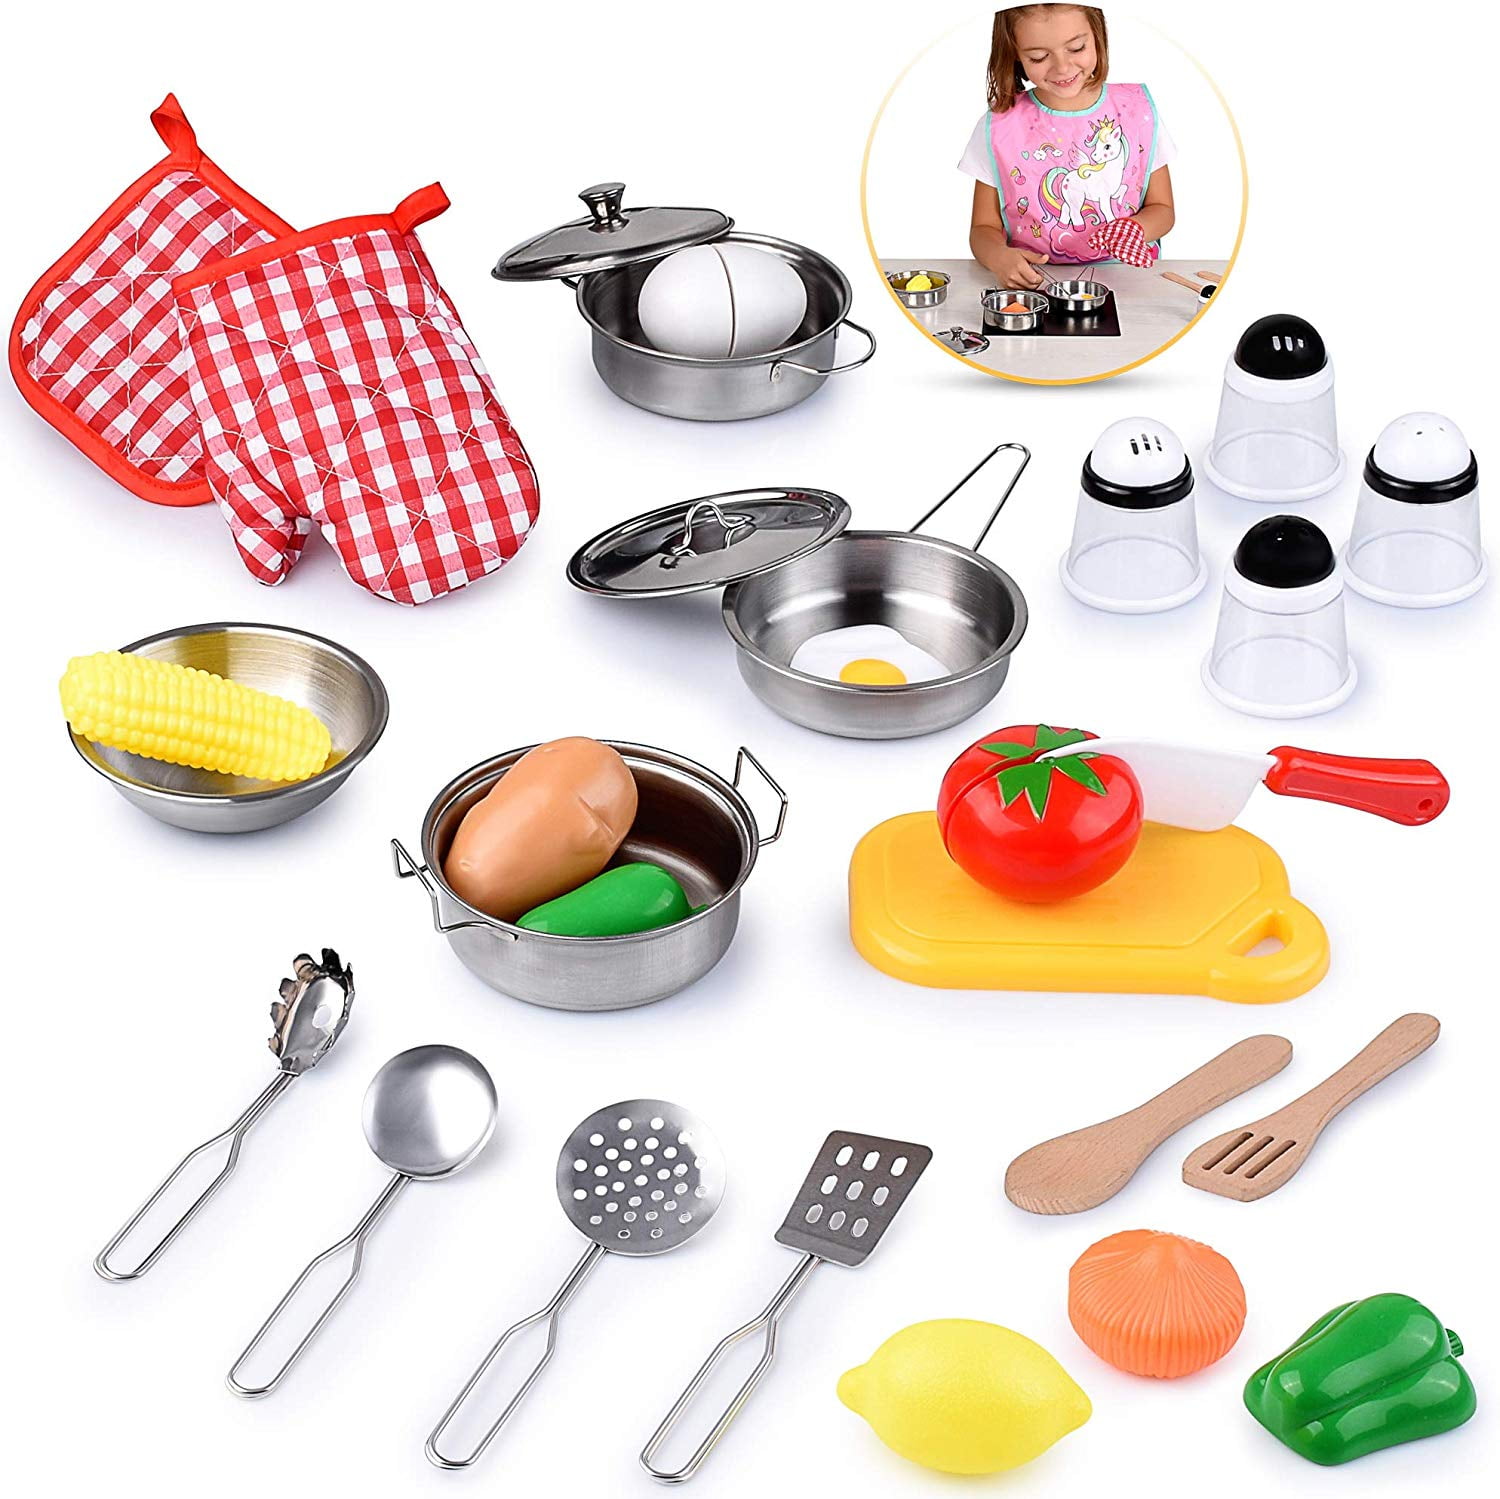 13 Pcs Kids Play Kitchen Cooking Utensils Pots Pans Accessories Set Children Toy 